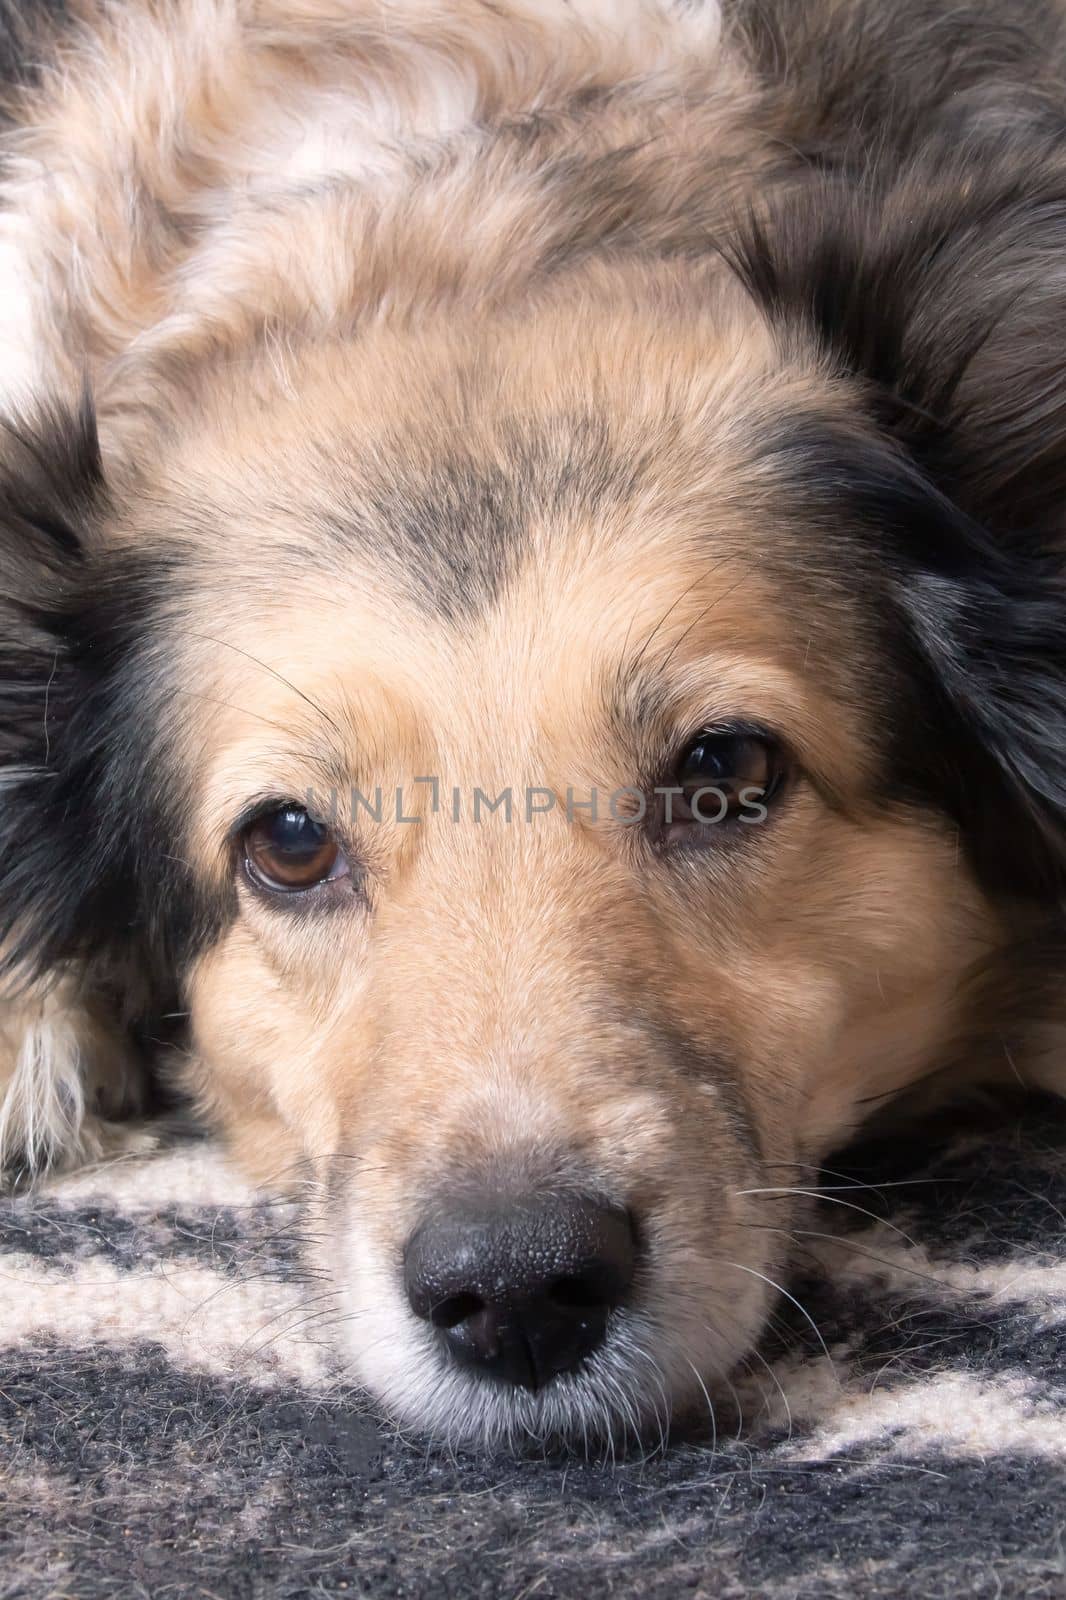 Domestic grey fluffy dog, close up portrait by Vera1703